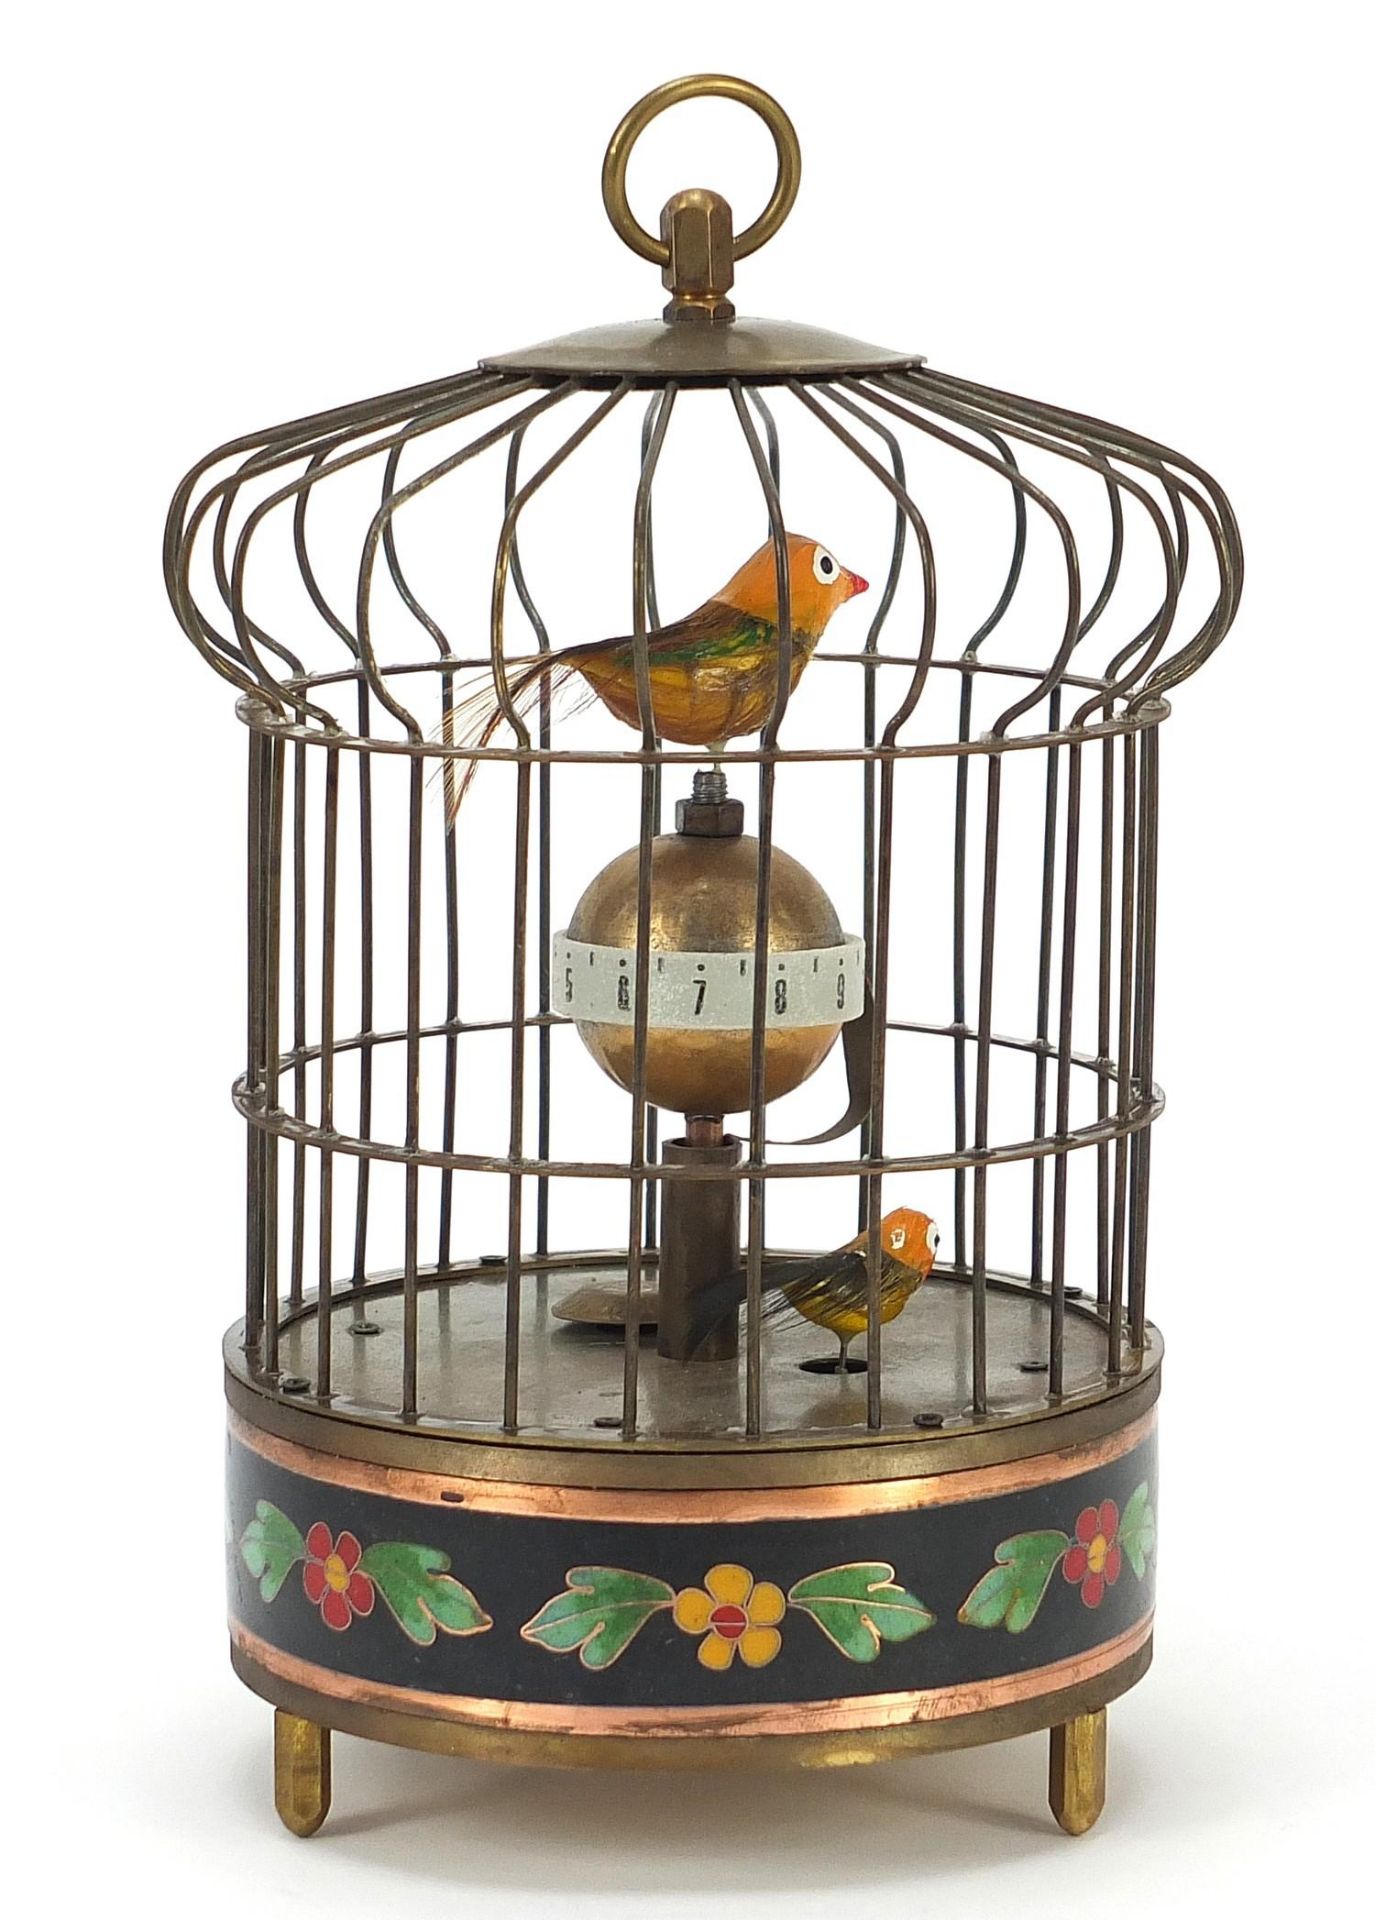 Brass clockwork automaton bird cage alarm clock with cloisonné band, 19.5cm high - Image 2 of 4